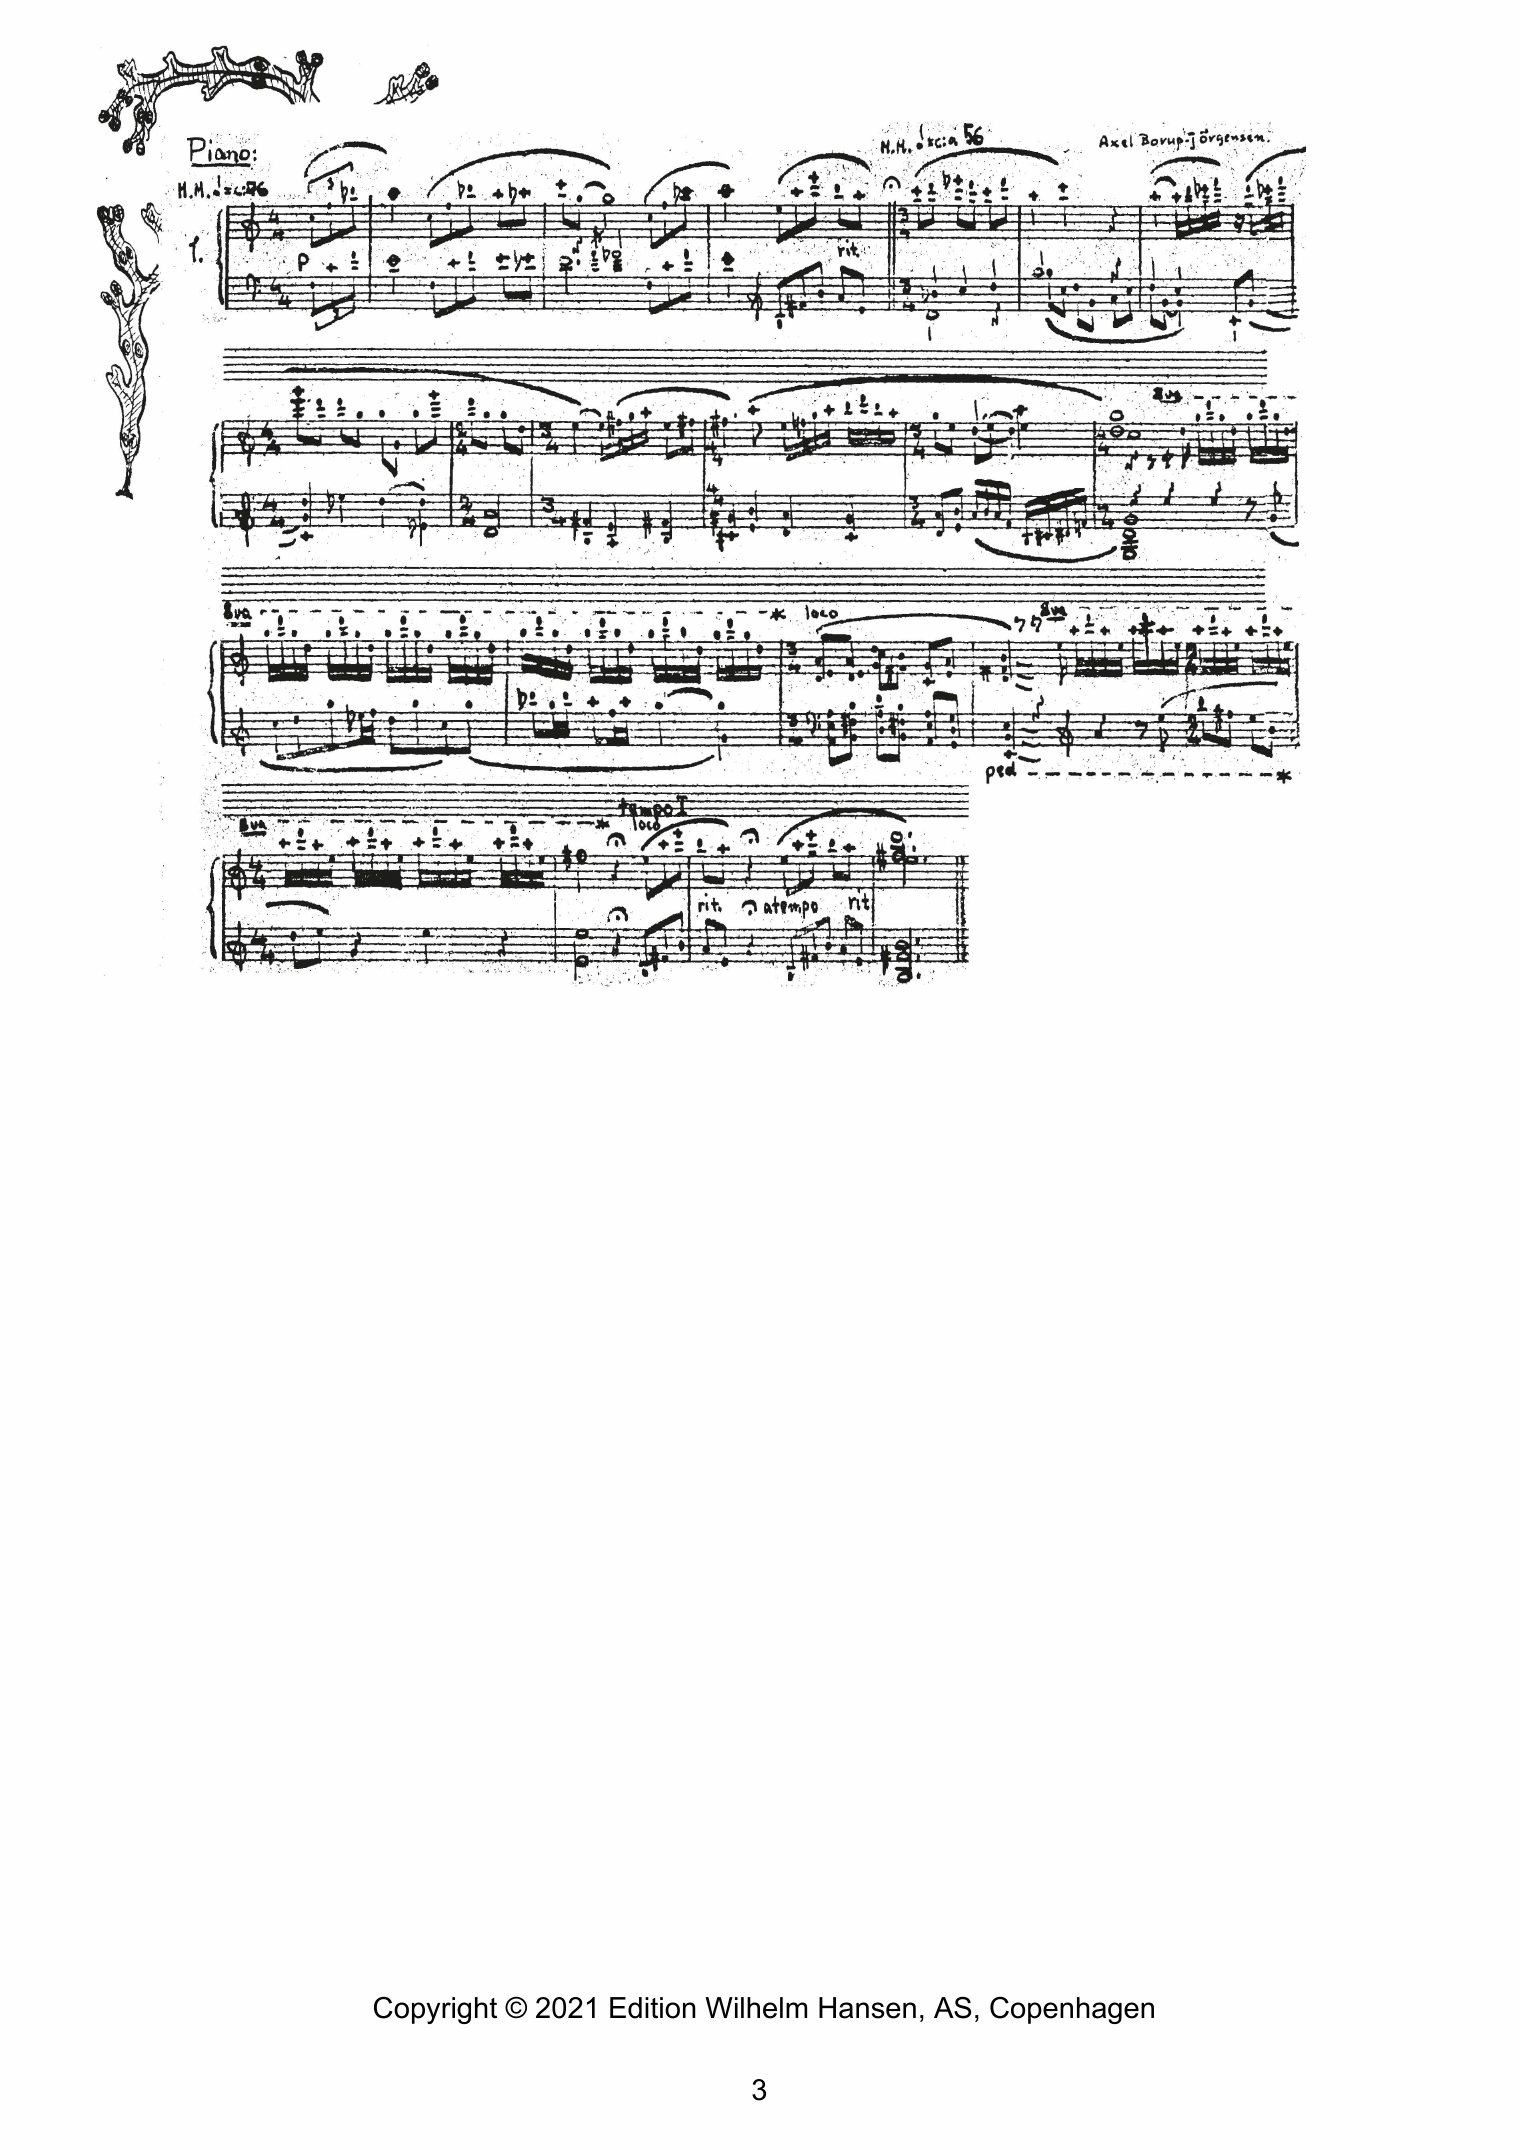 Axel Borup-J?sen Marina Skisser: Impressionistic Studies of the Sea sheet music notes printable PDF score